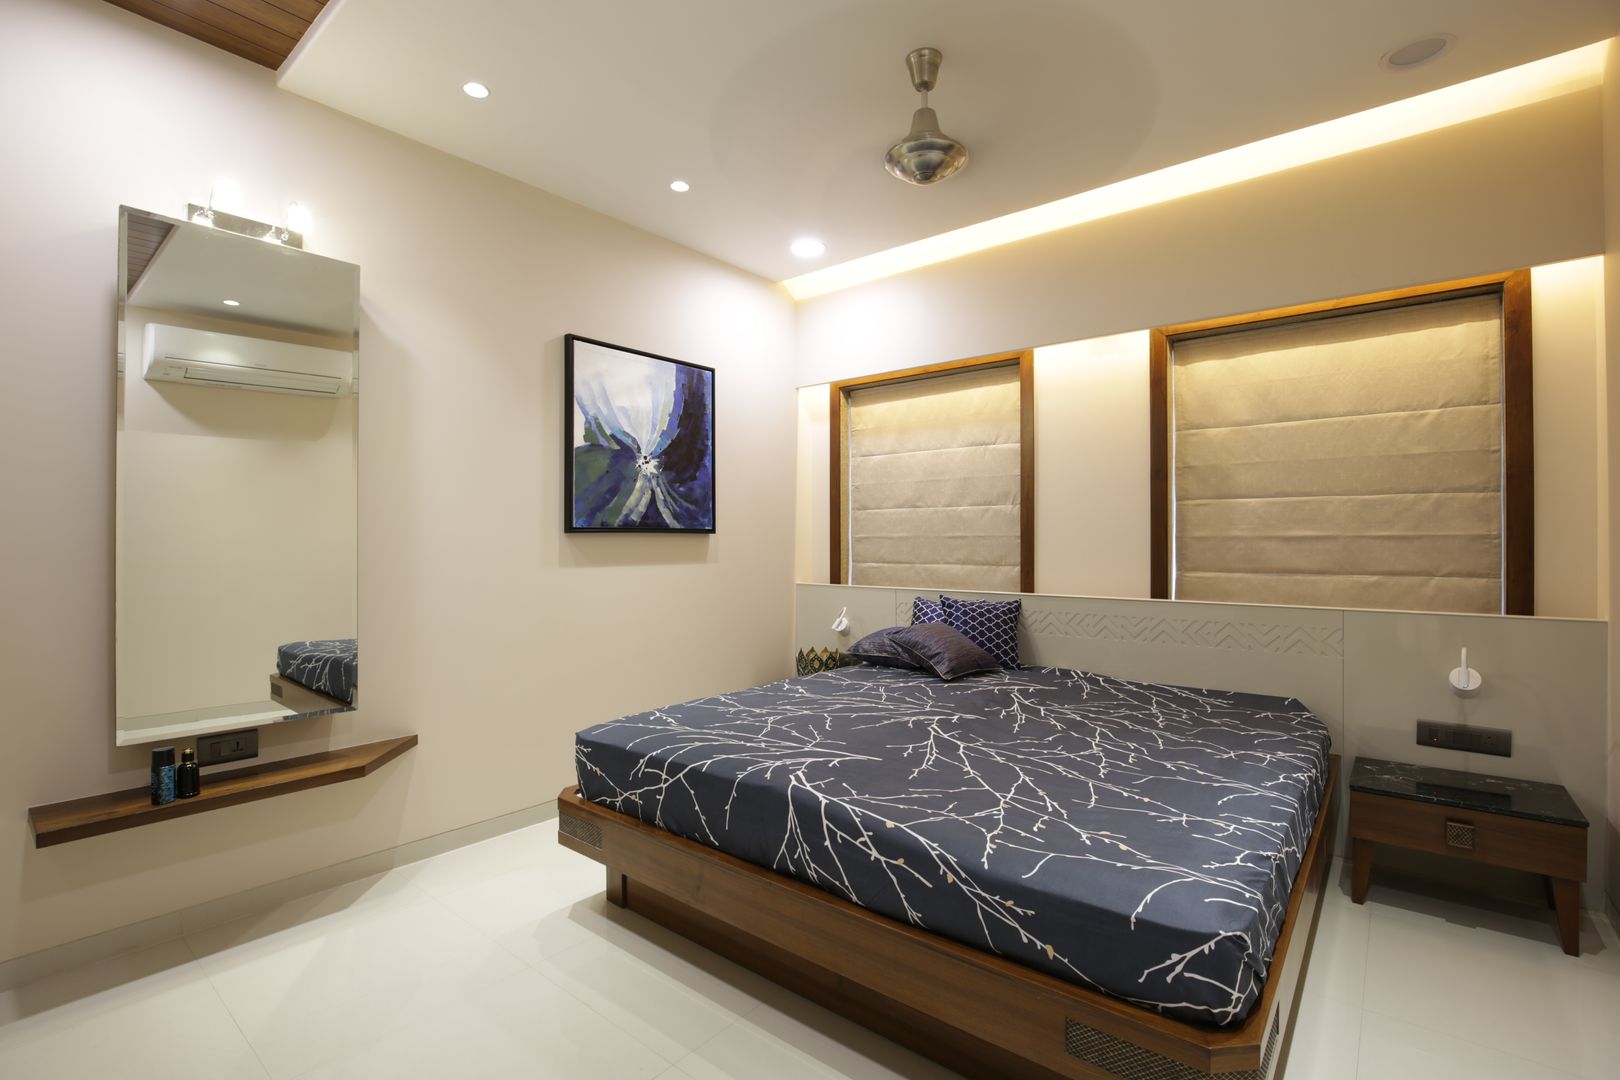 Mr vora's flat, studio 7 designs studio 7 designs Asian style bedroom